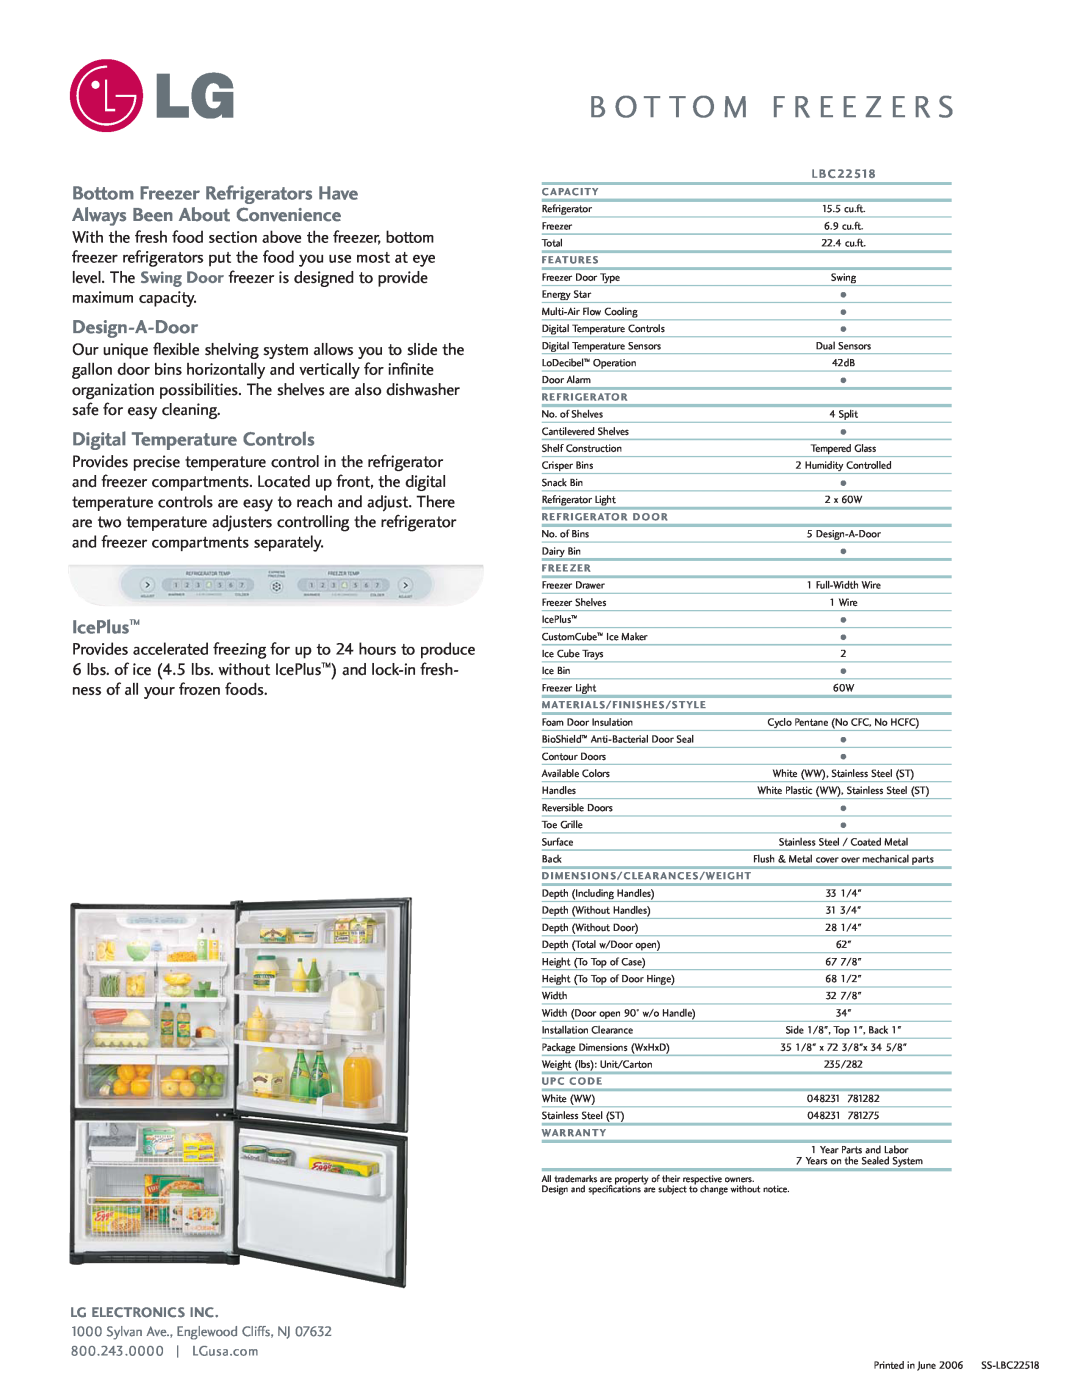 LG Electronics LBC22518 manual Bottom Freezer Refrigerators Have, Always Been About Convenience, Design-A-Door, IcePlus 